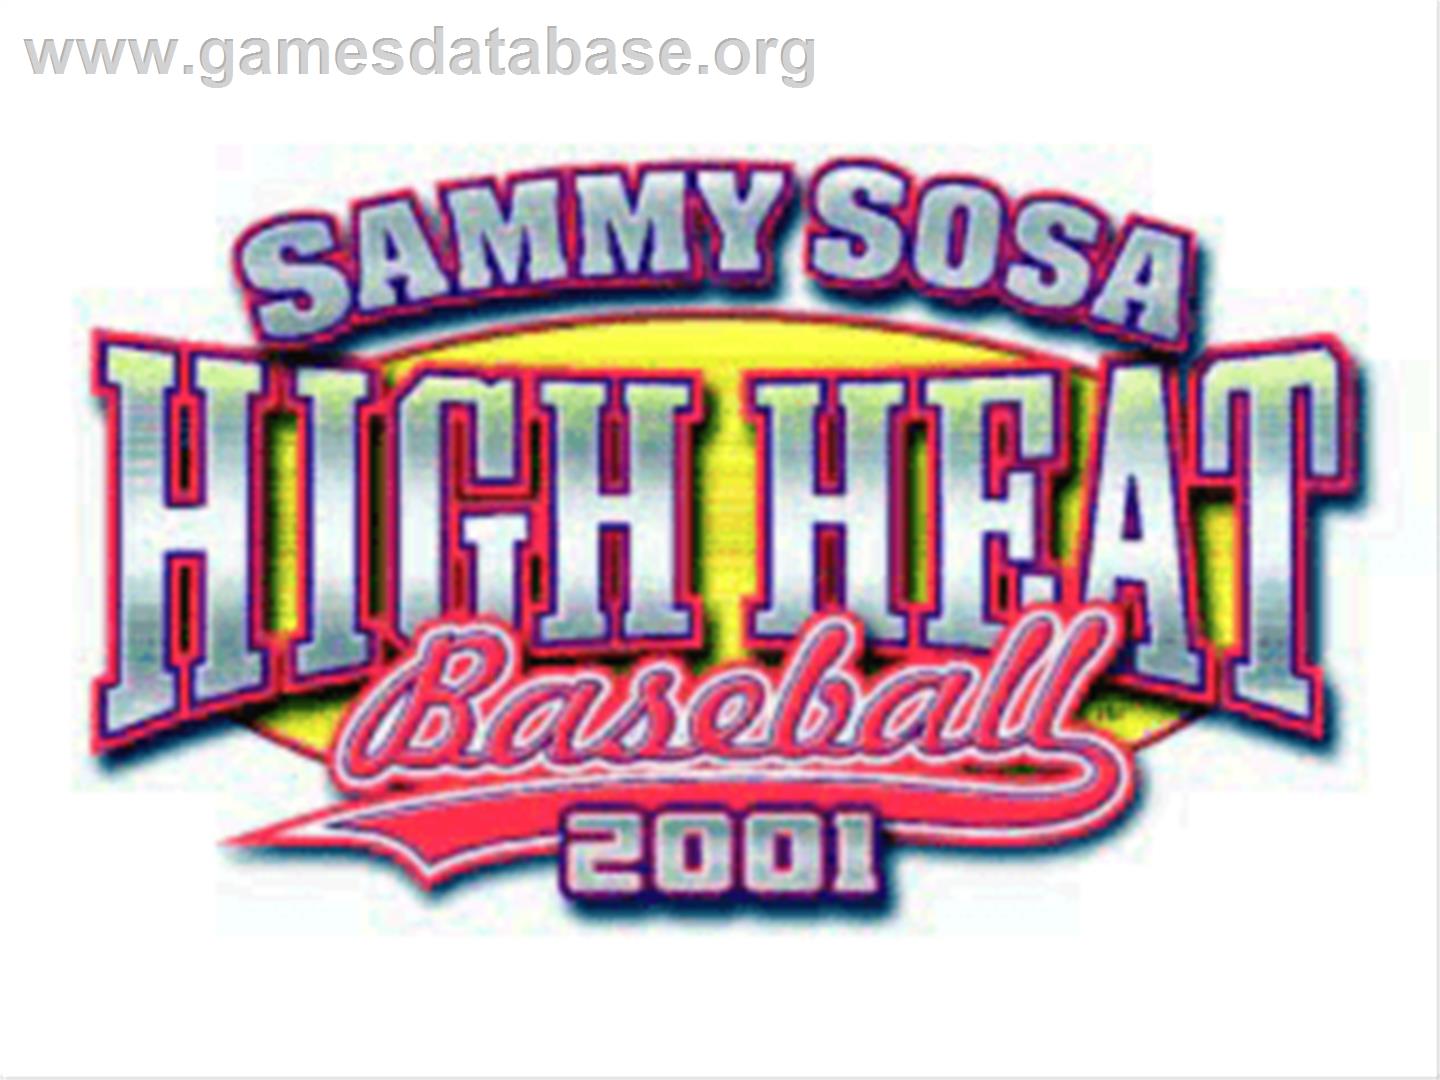 Sammy Sosa High Heat Baseball 2001 - Sony Playstation - Artwork - Title Screen